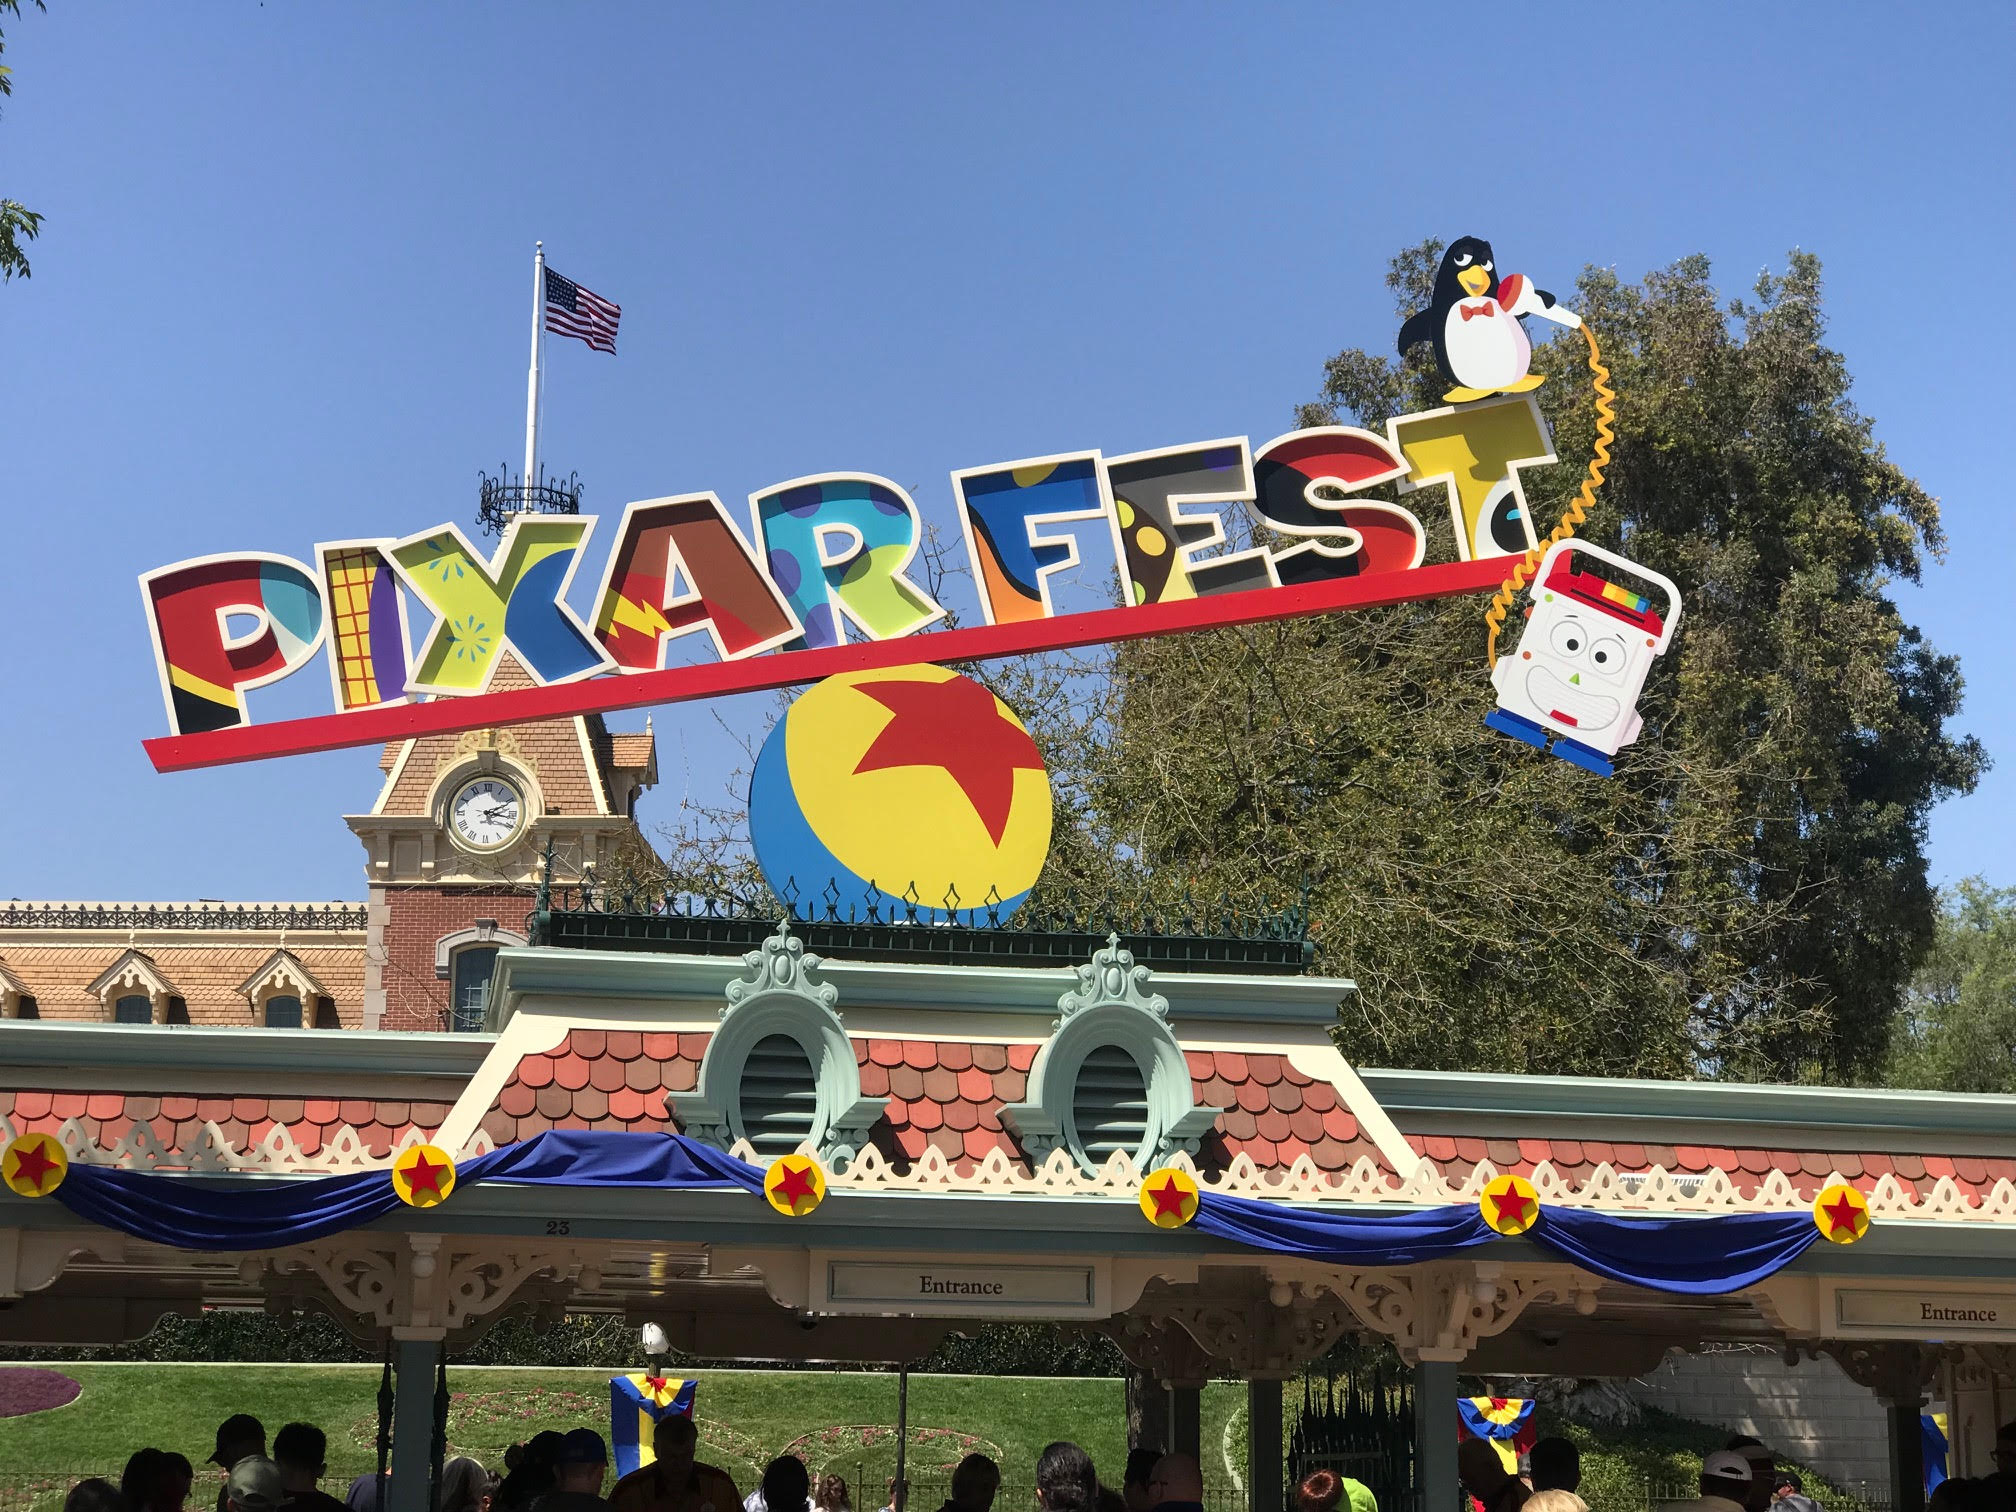 Pixar Fest begins at the Disneyland Resort